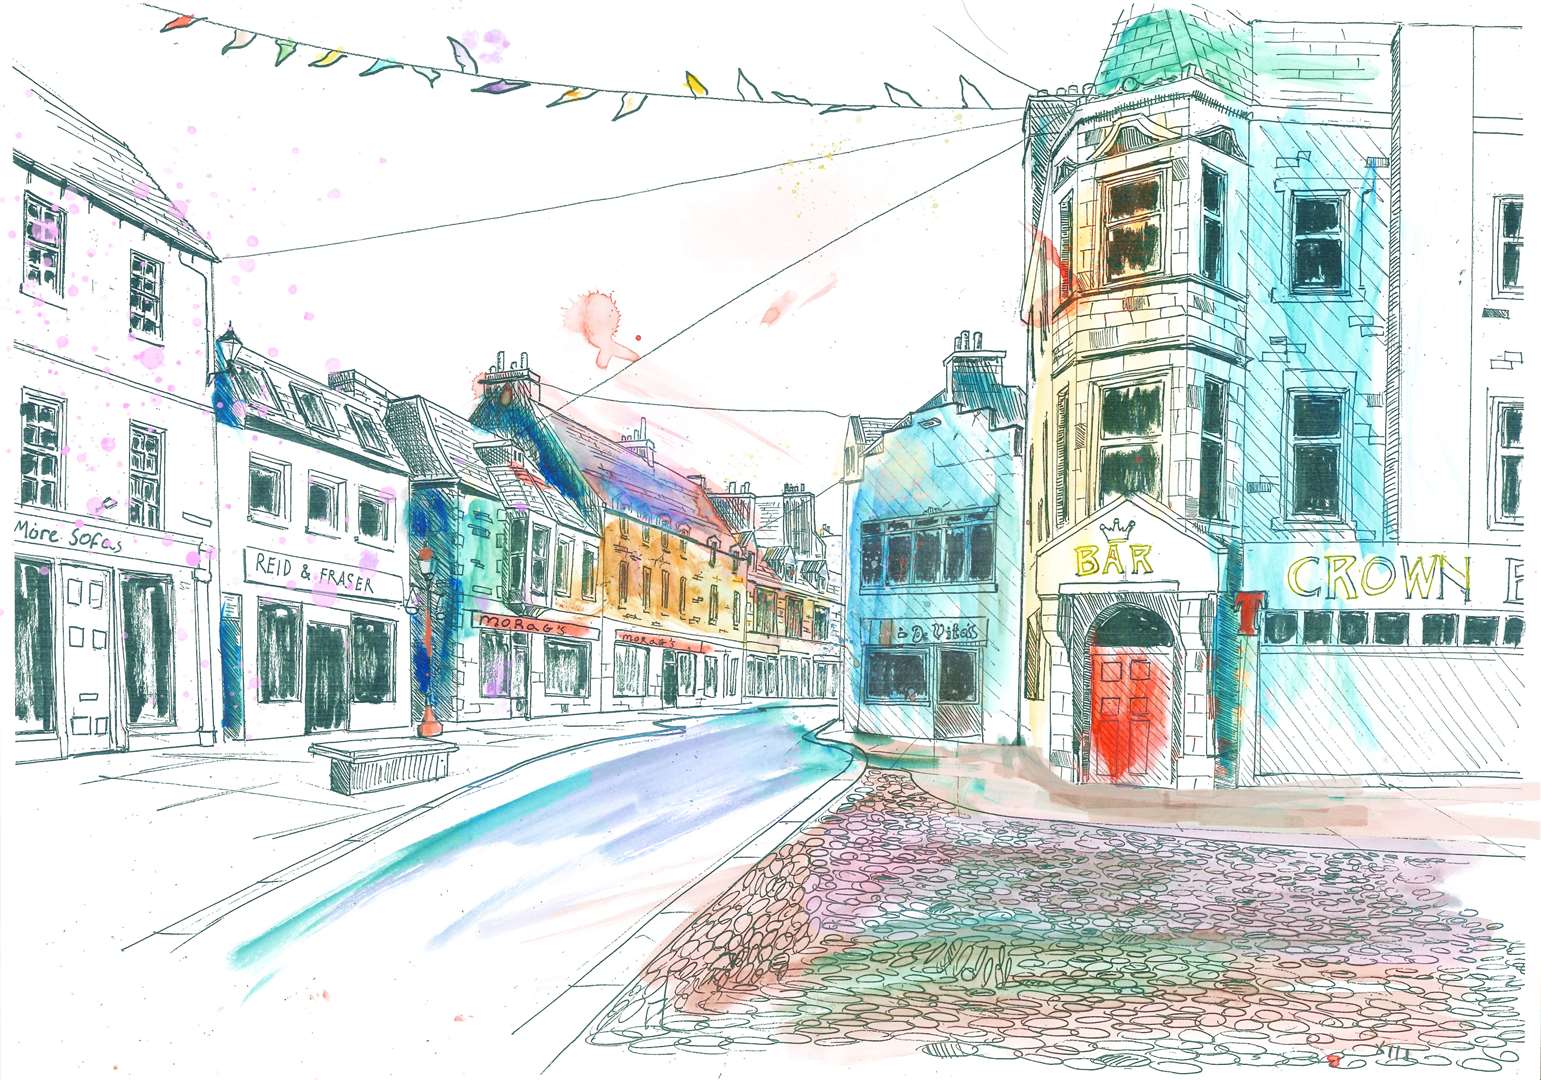 An artistic rendering of Wick High Street by JJ McGuckin.